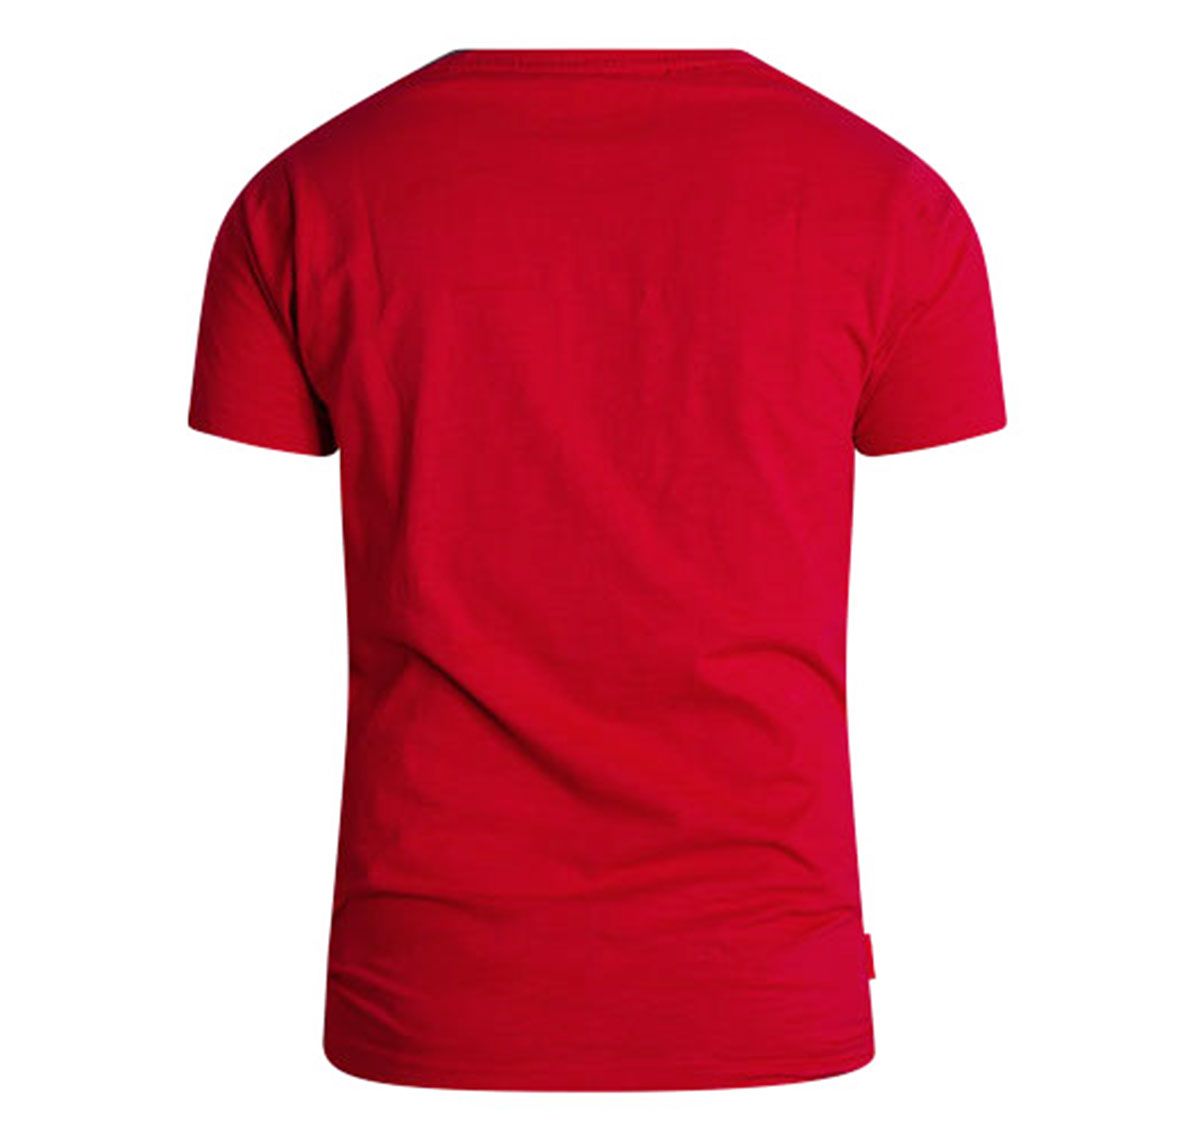 aussieBum T-Shirt DESIGNER TEE AB, red